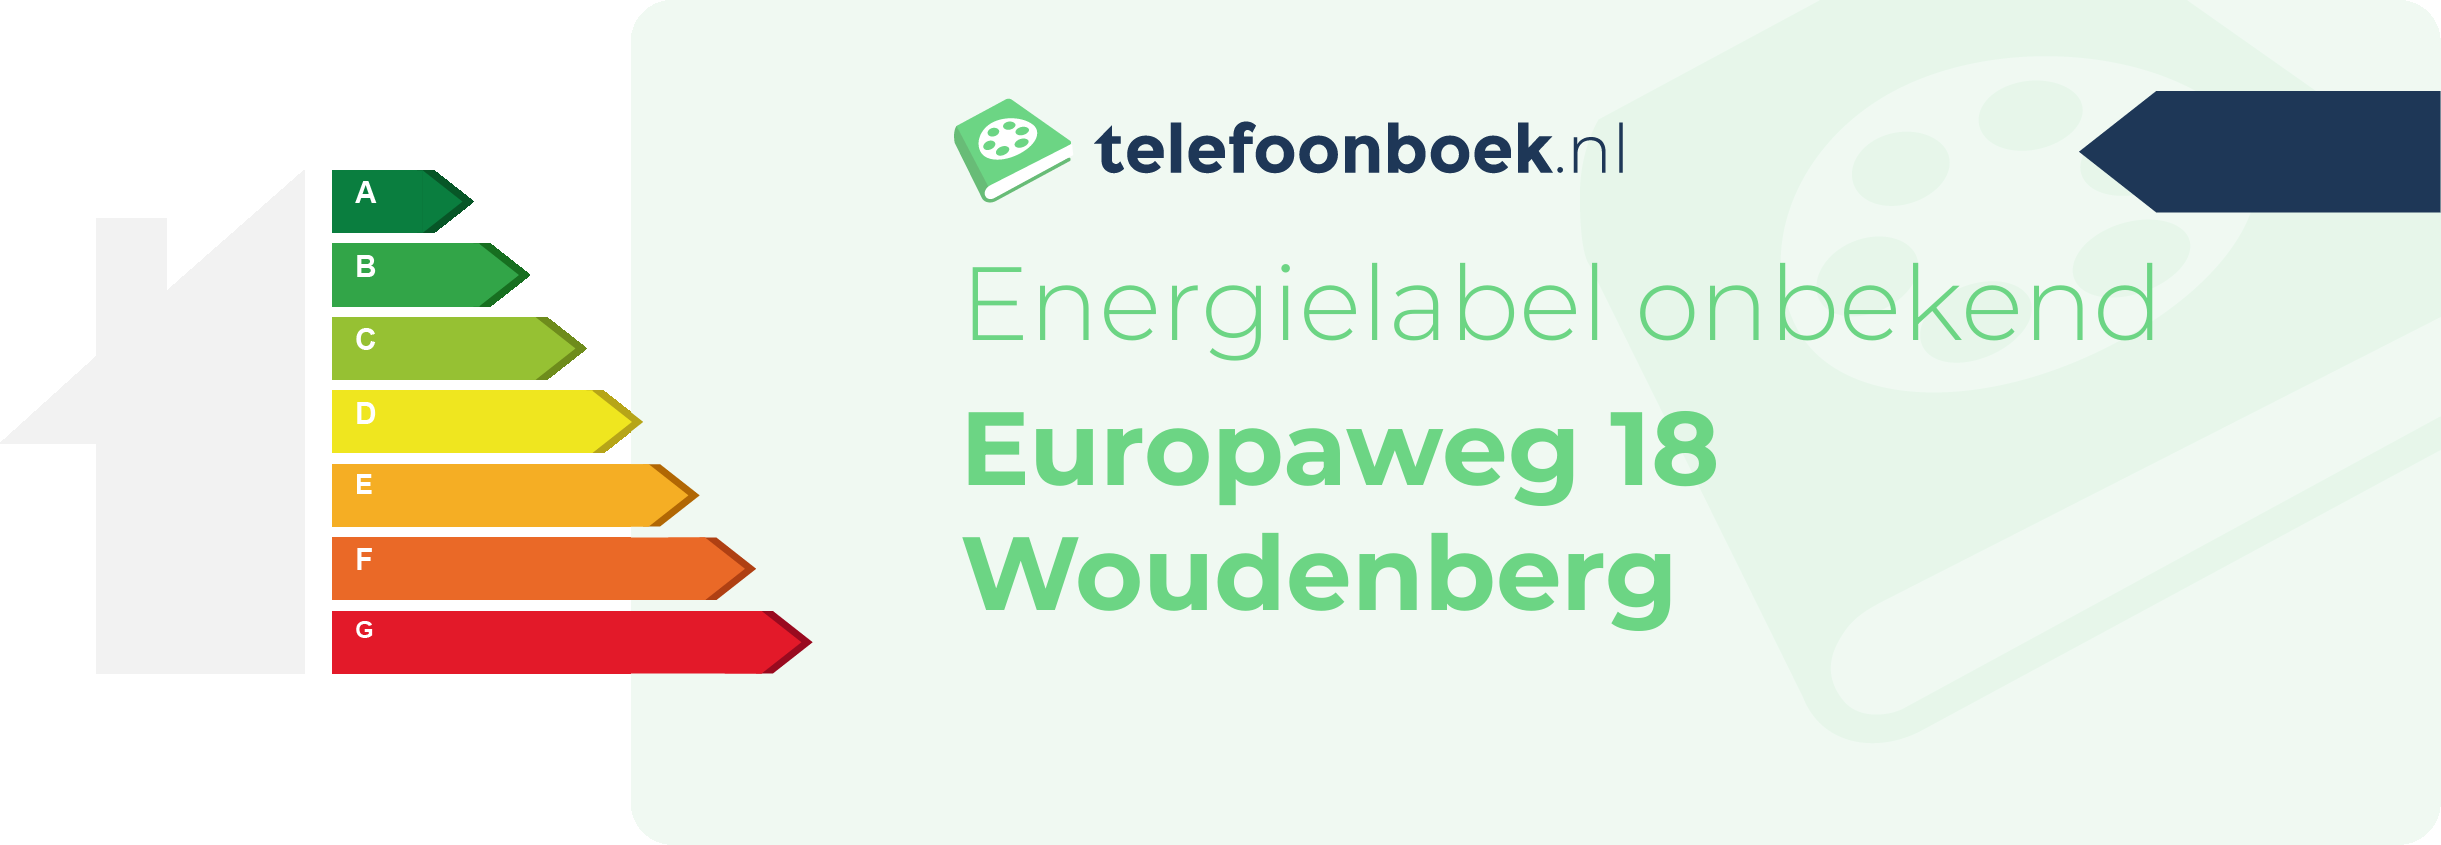 Energielabel Europaweg 18 Woudenberg